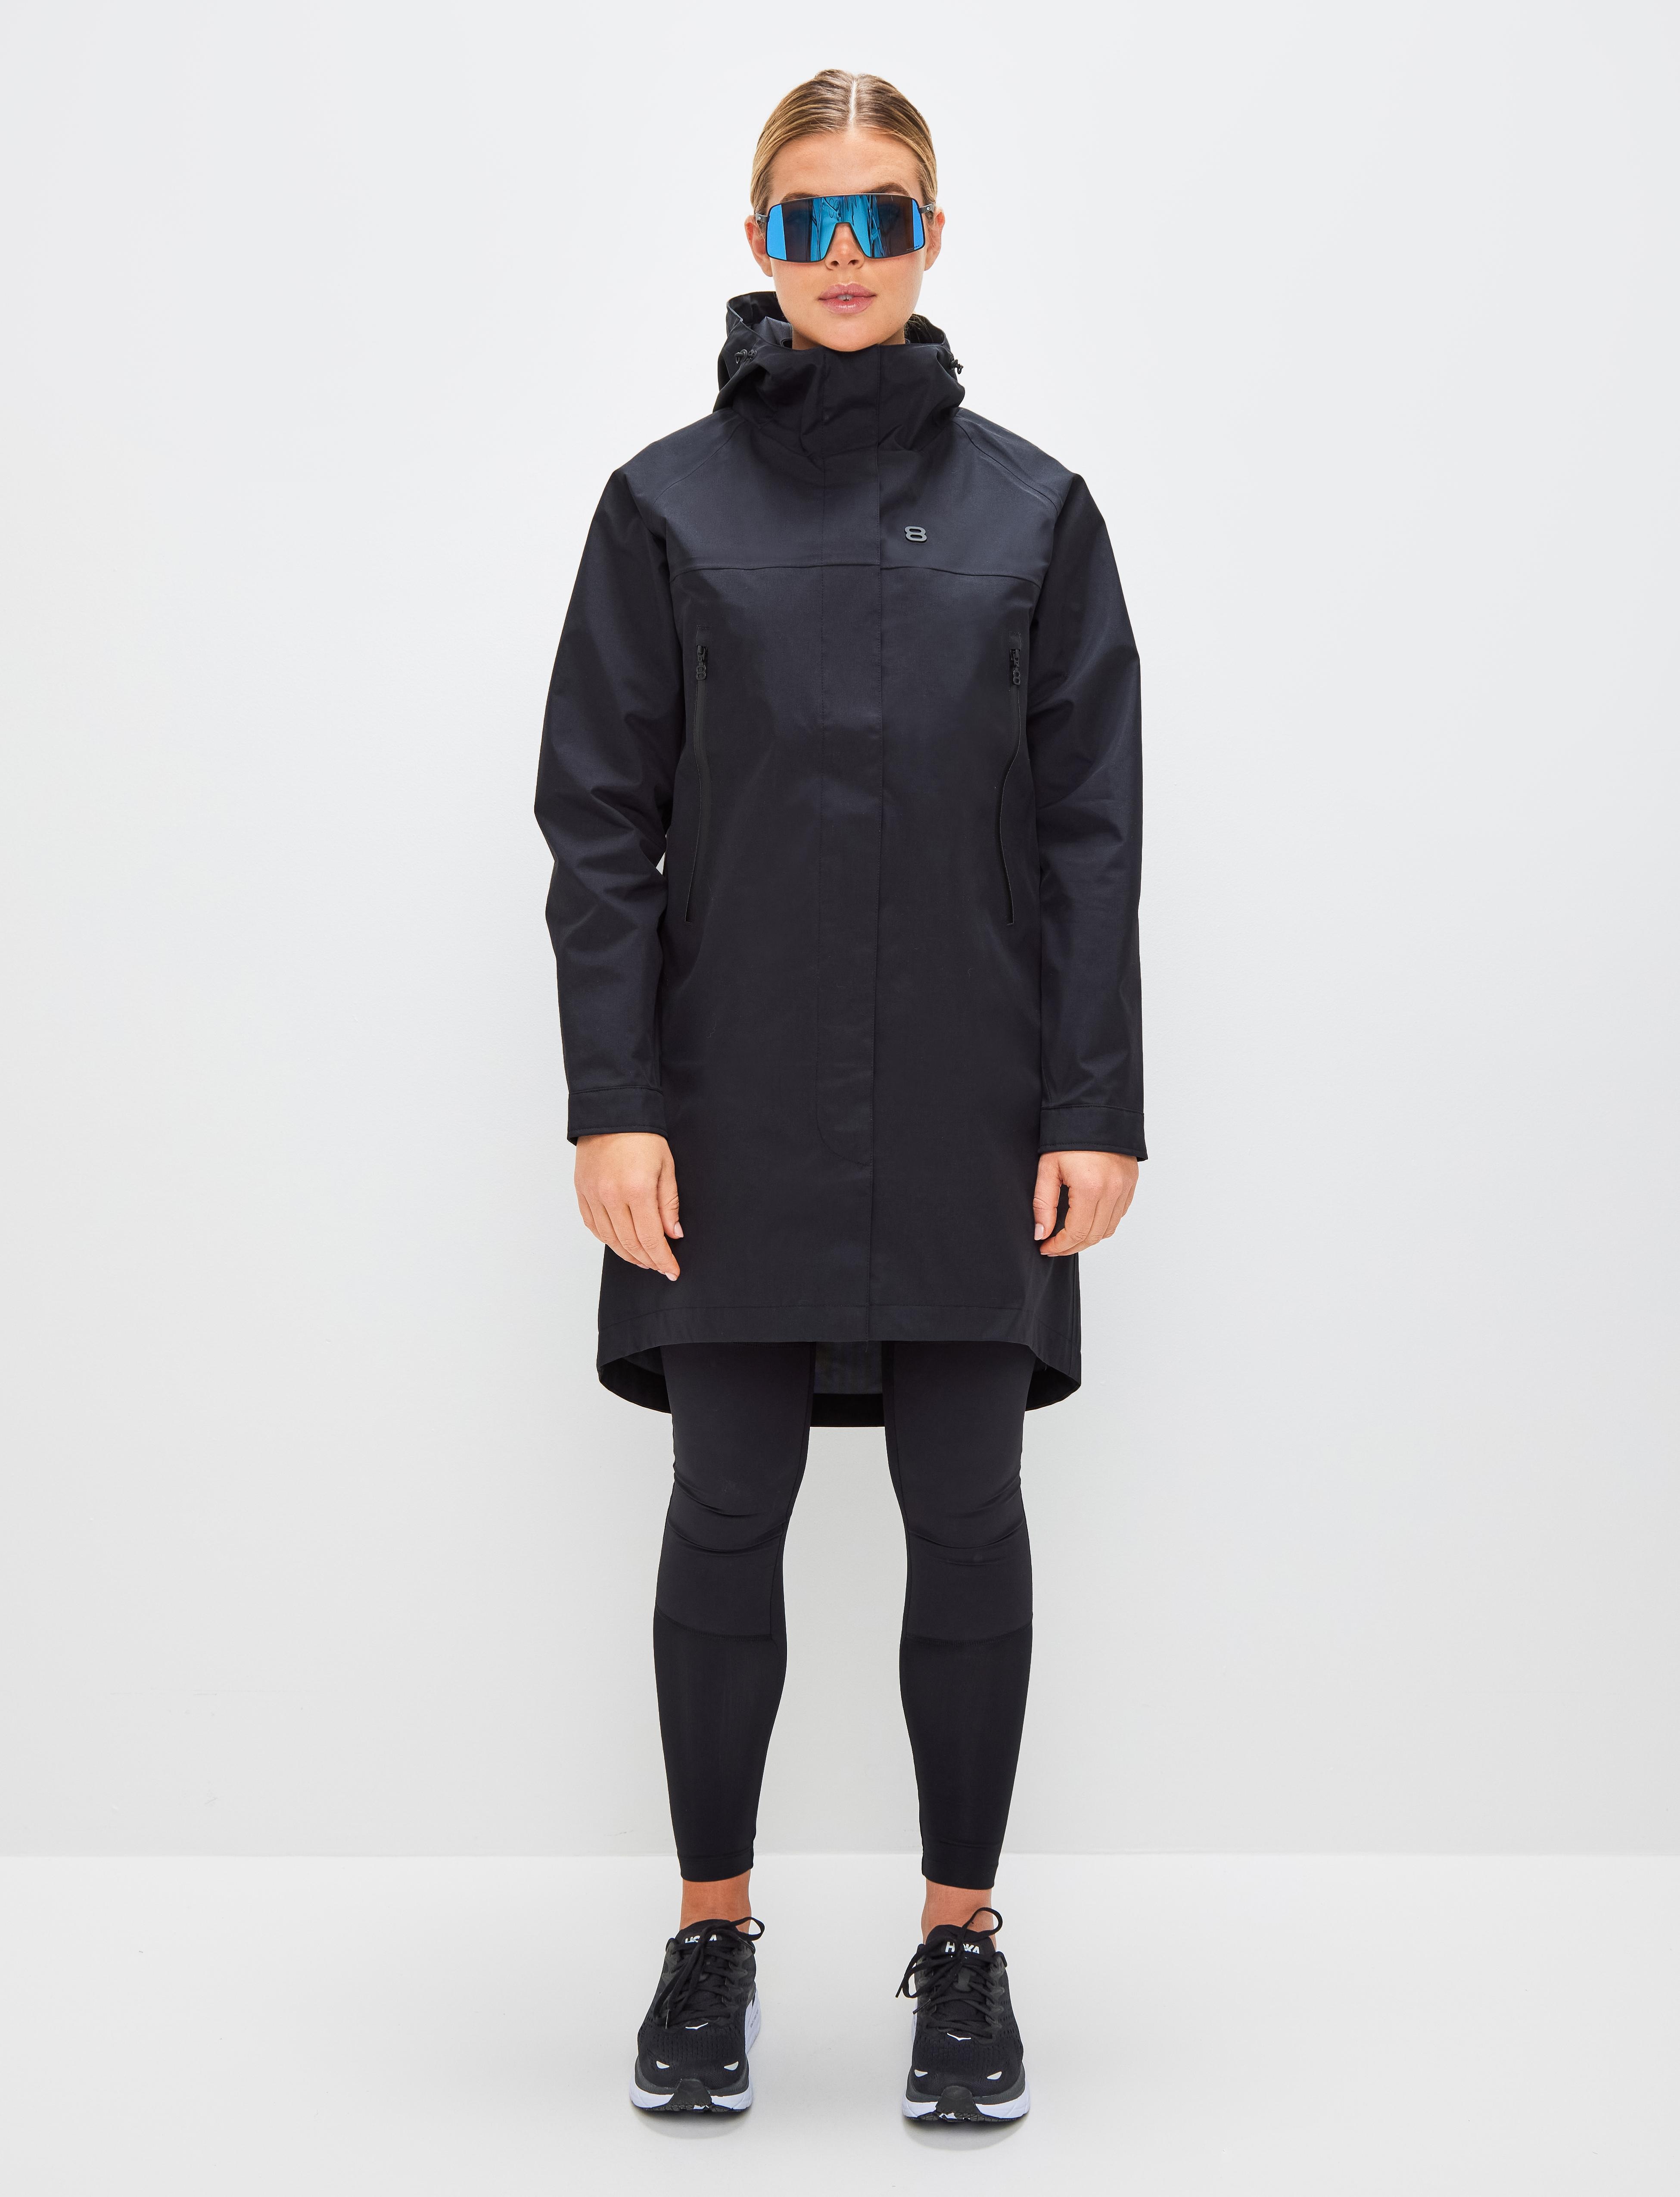 Losan 2.0 W Coat Black - Black long shell jacket women